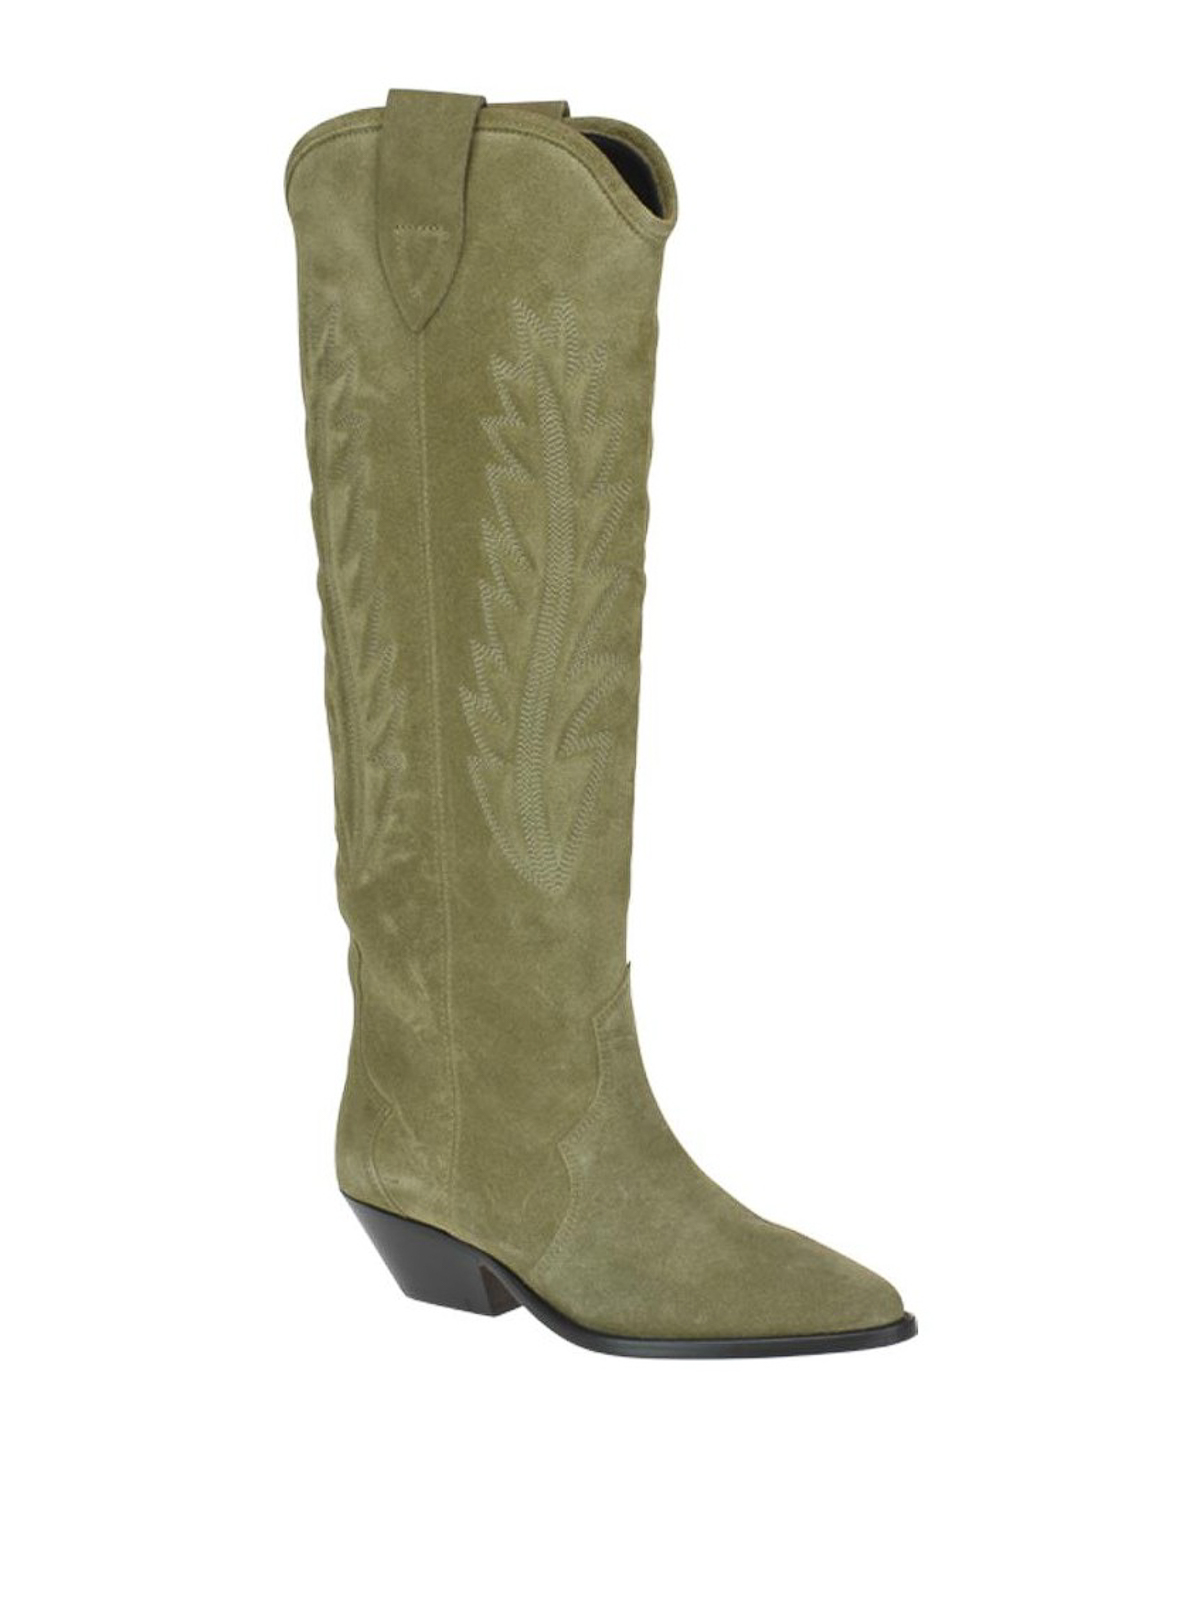 Snikken Komkommer Trottoir Boots Isabel Marant - Taupe Denzy suede boots - BT003718A009S50TA